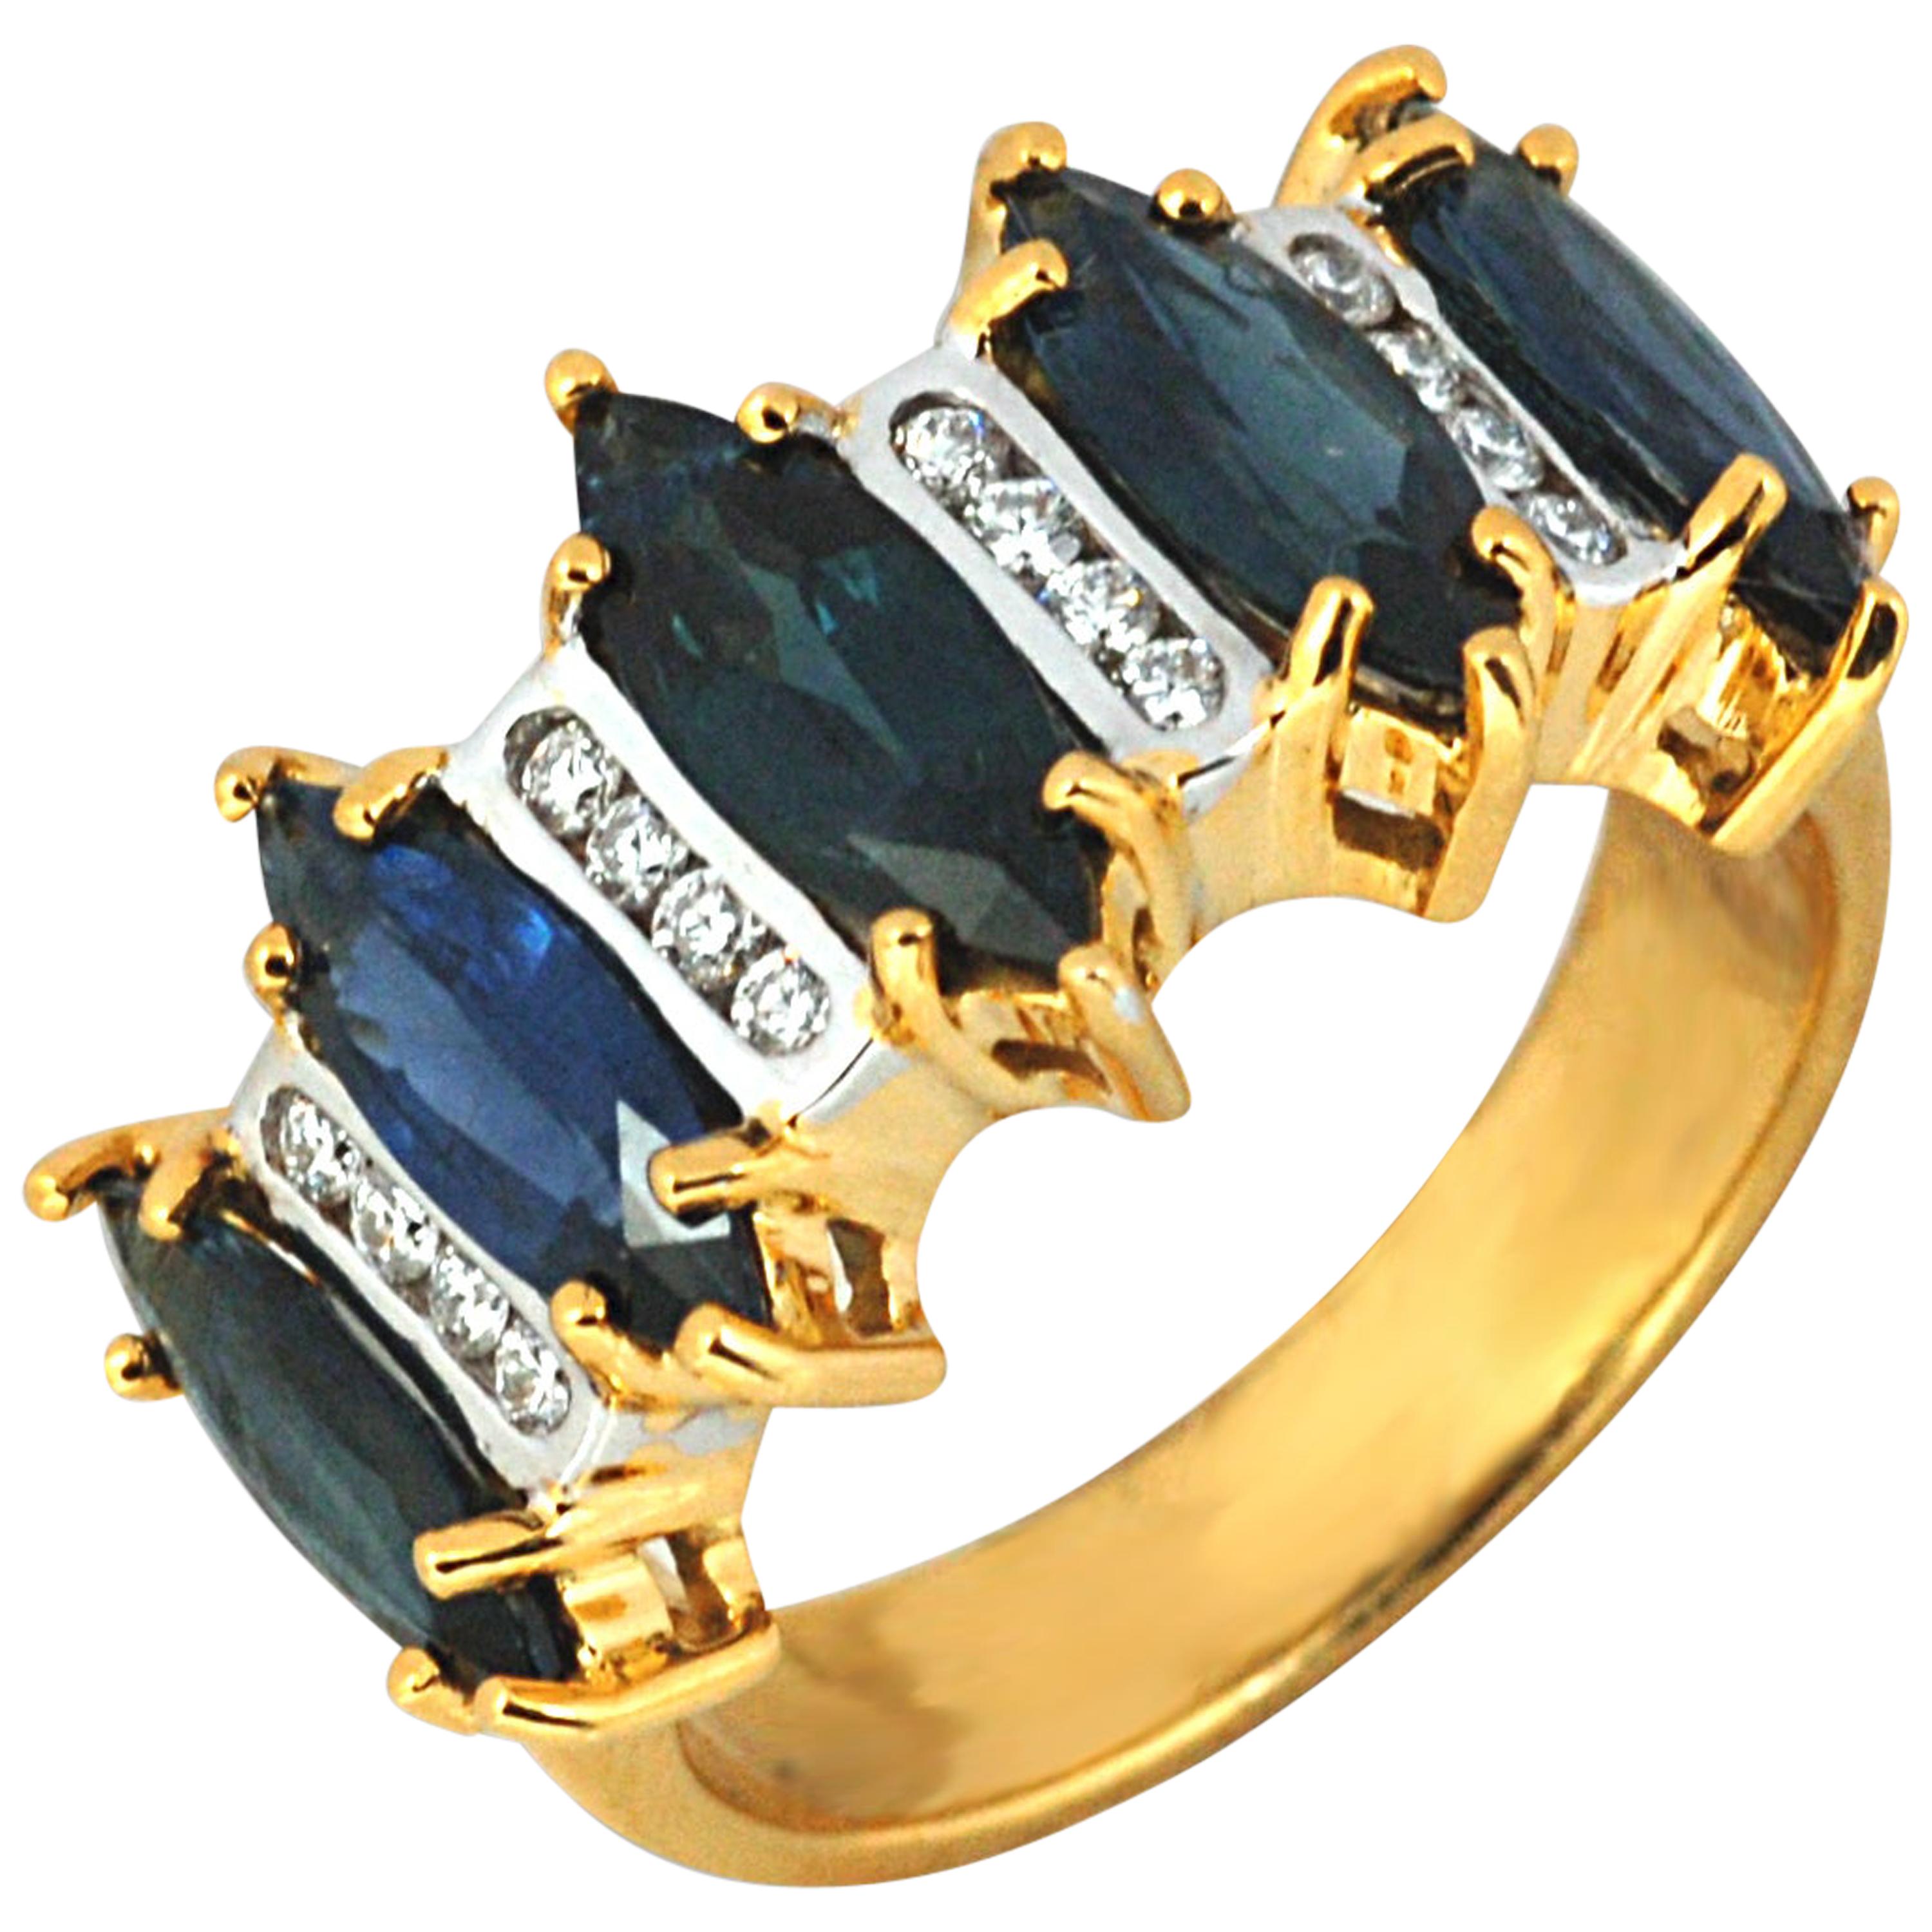 Blue Sapphire 3.04 Carat with Diamond 0.18 Carat Ring in 18 Karat Gold Settings